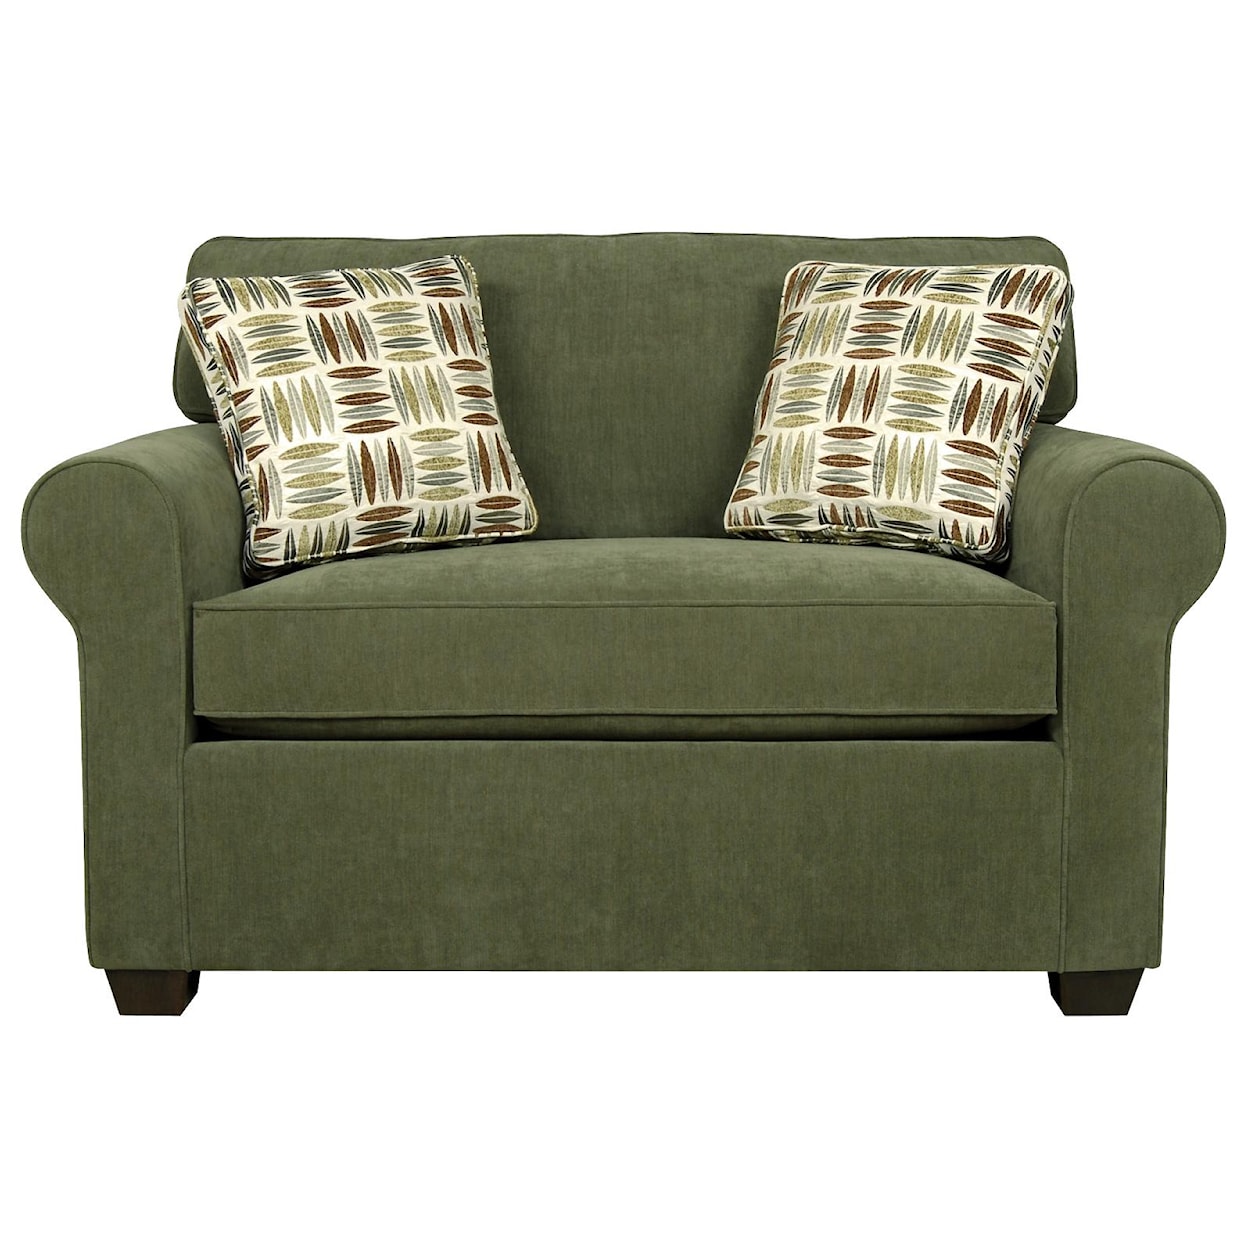 England 140 Series Upholstered Twin Sleeper Sofa